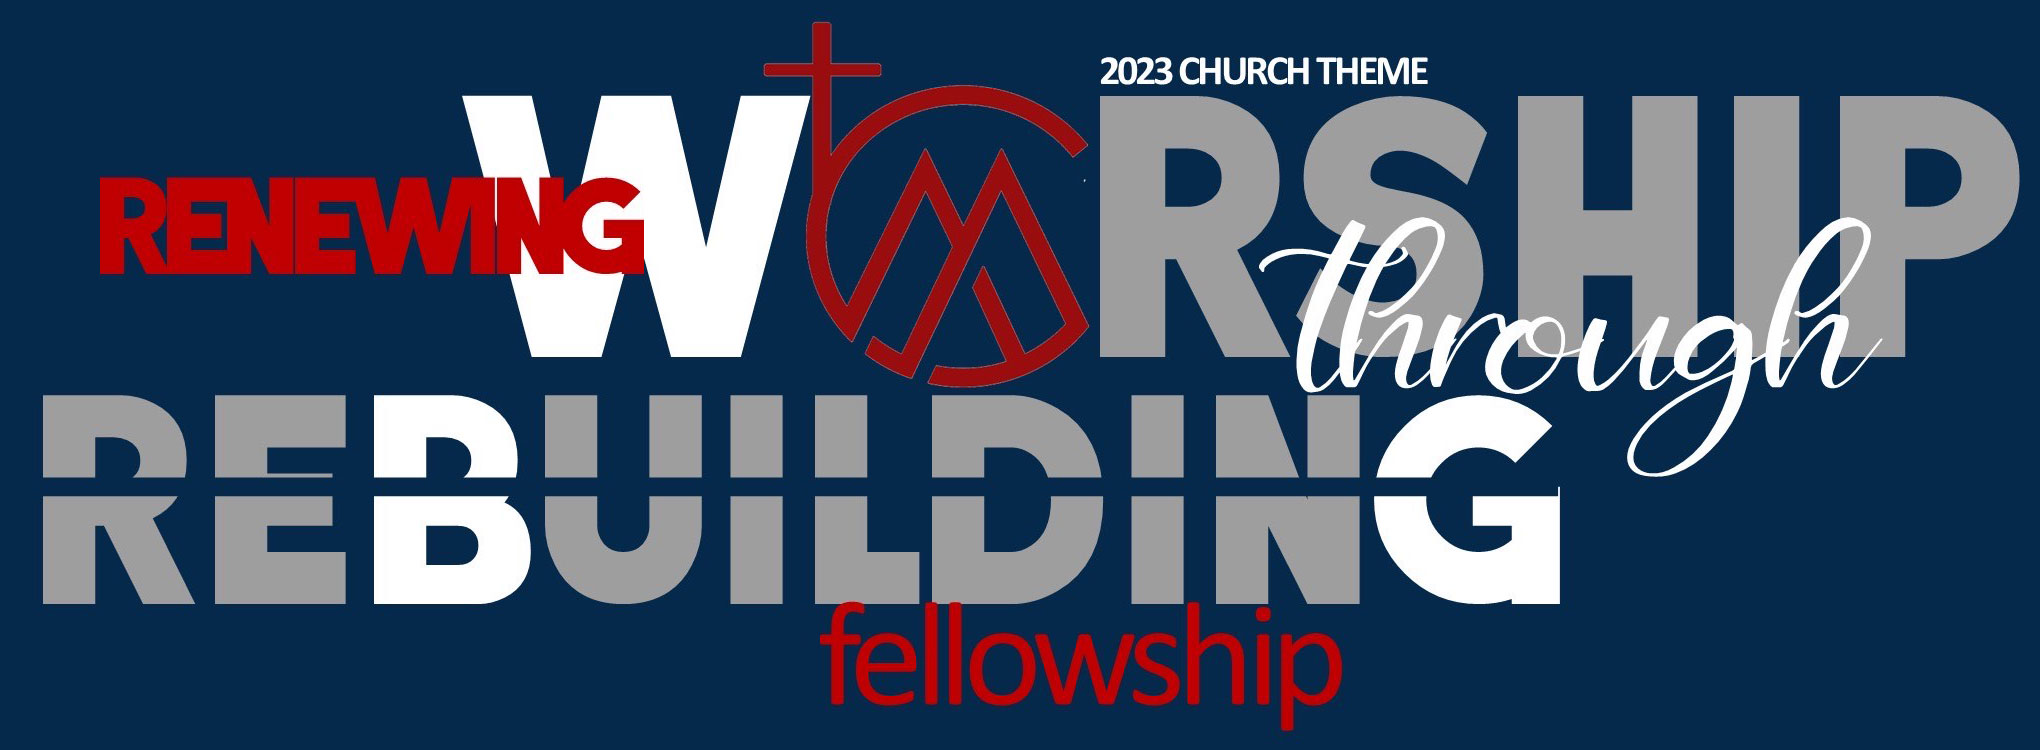 Our 2023 theme is: Renewing Worship through Rebuilding Fellowship